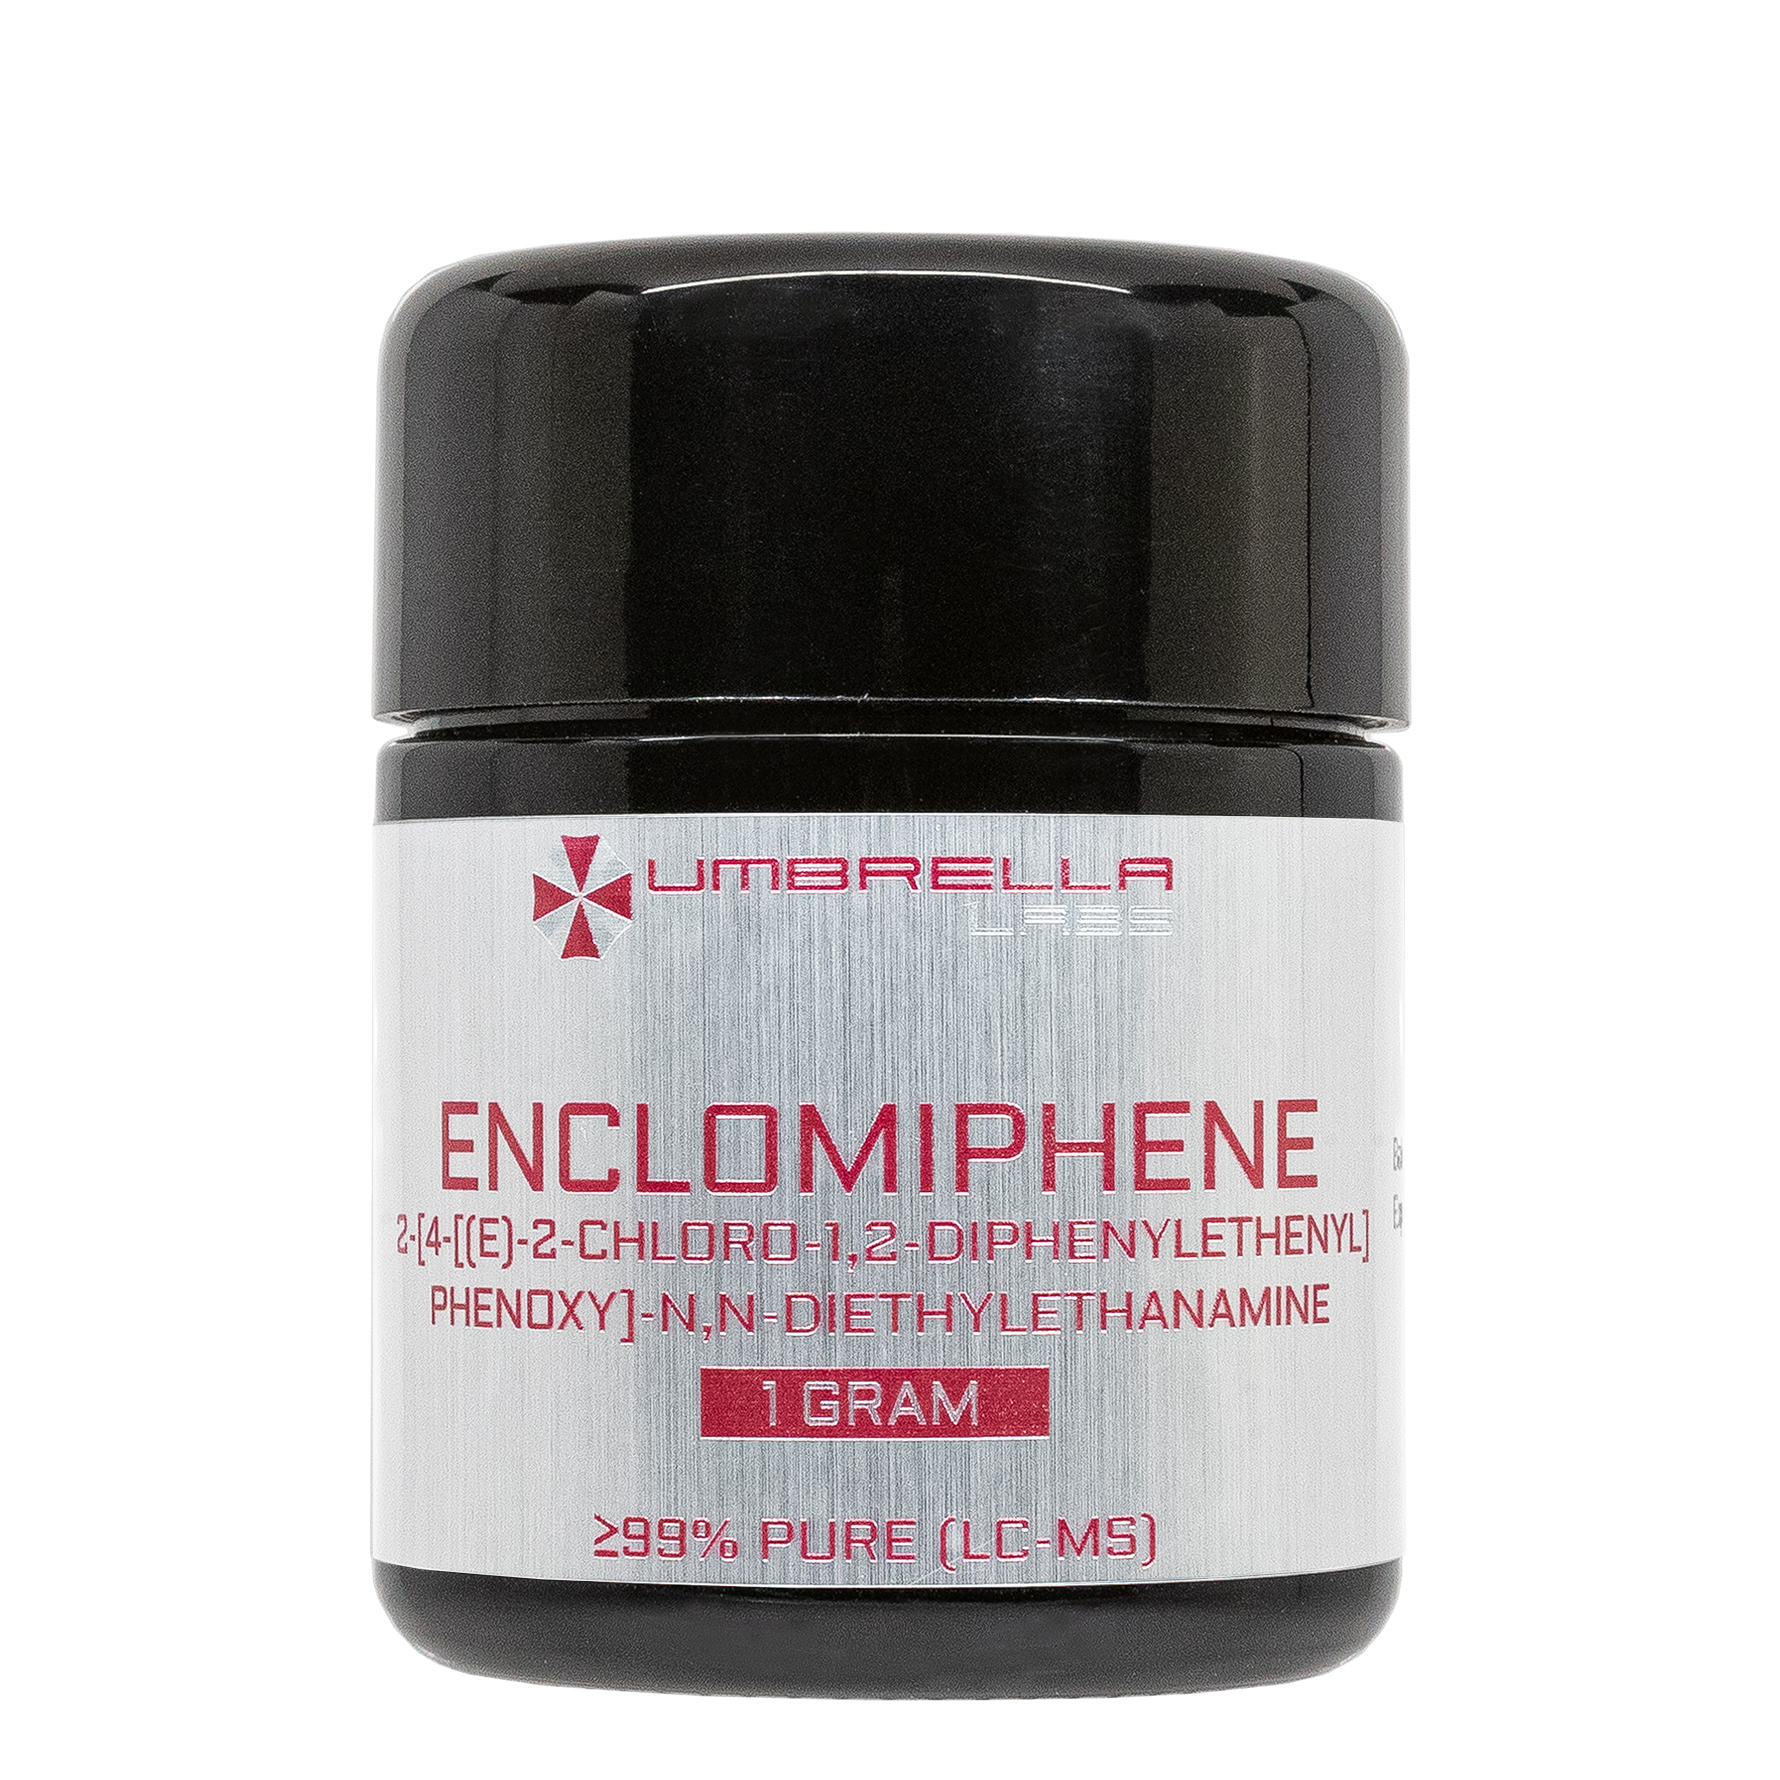 enclomiphene for sale